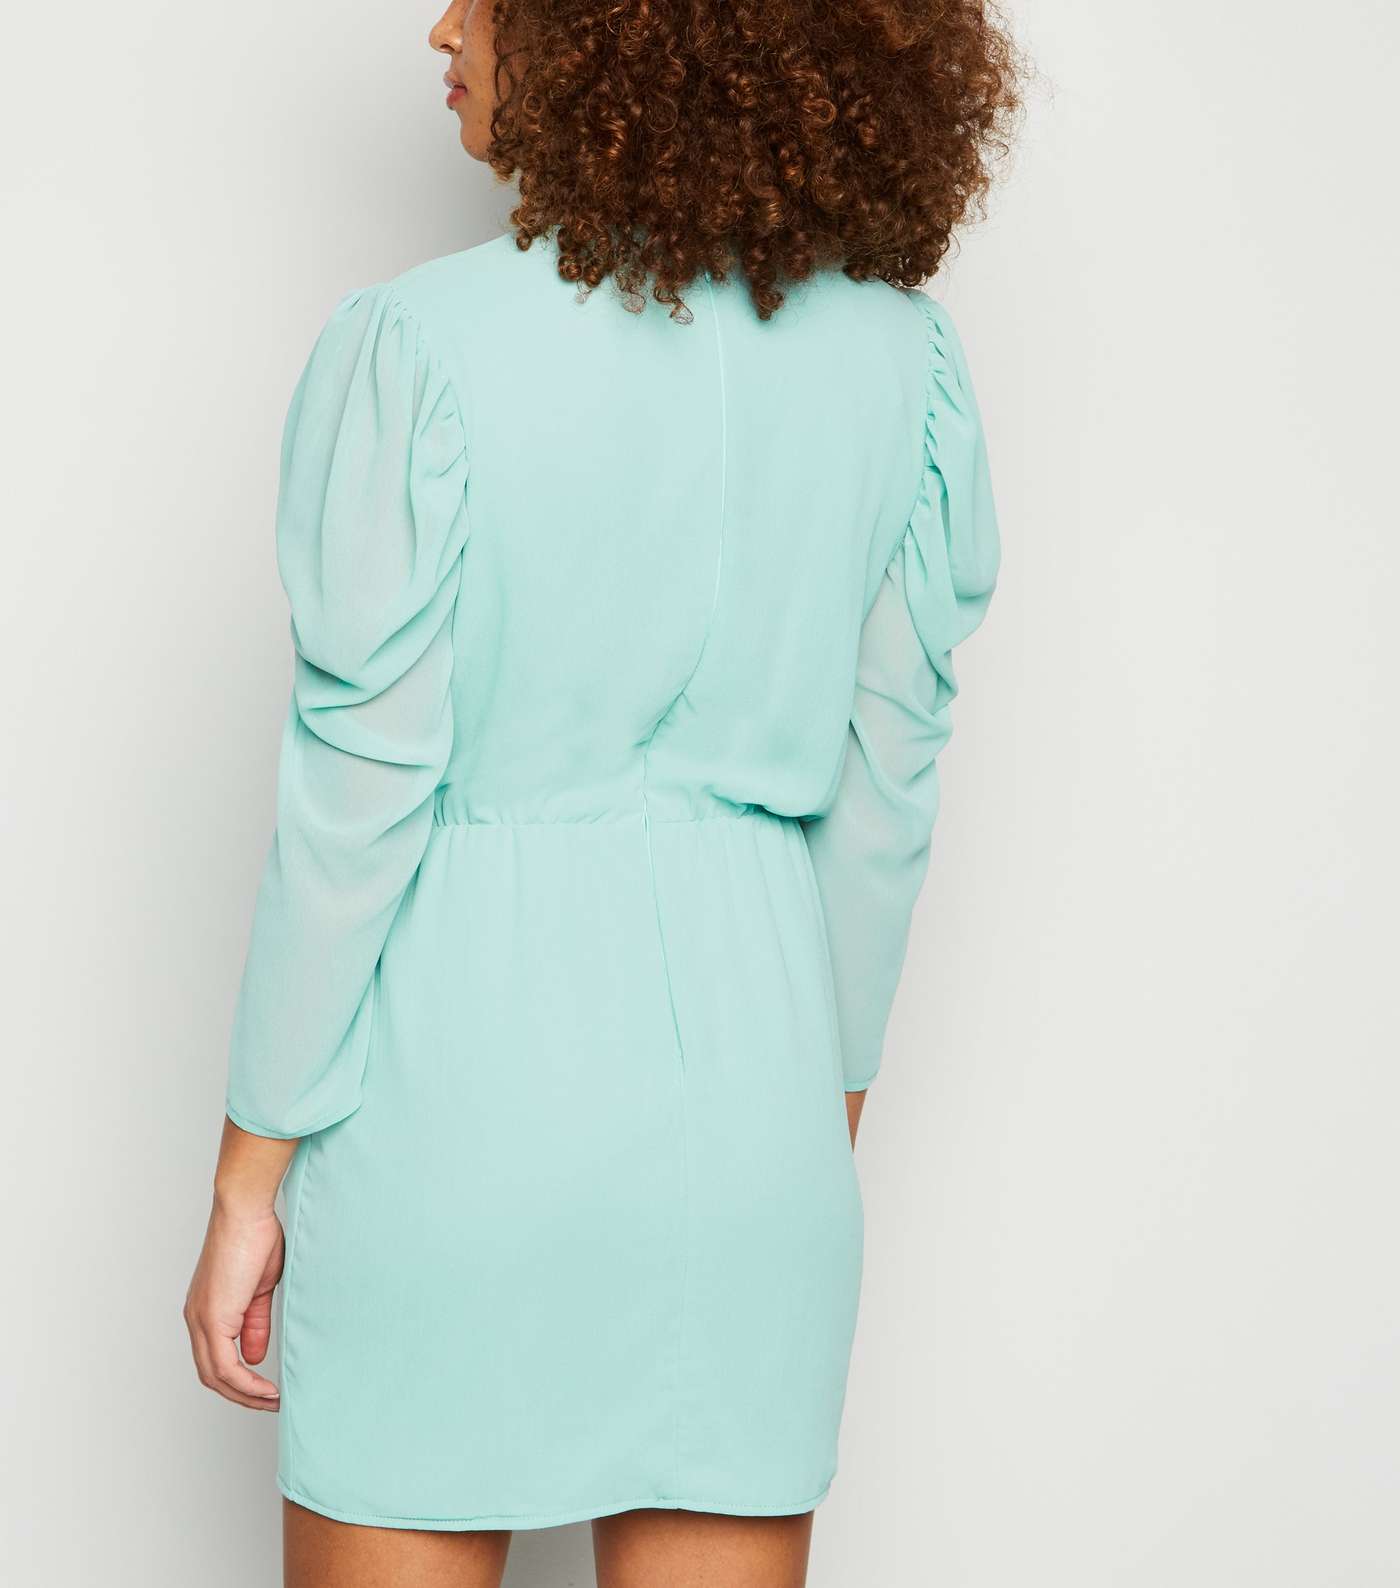 AX Paris Turquoise Chiffon Frill Trim Dress Image 3